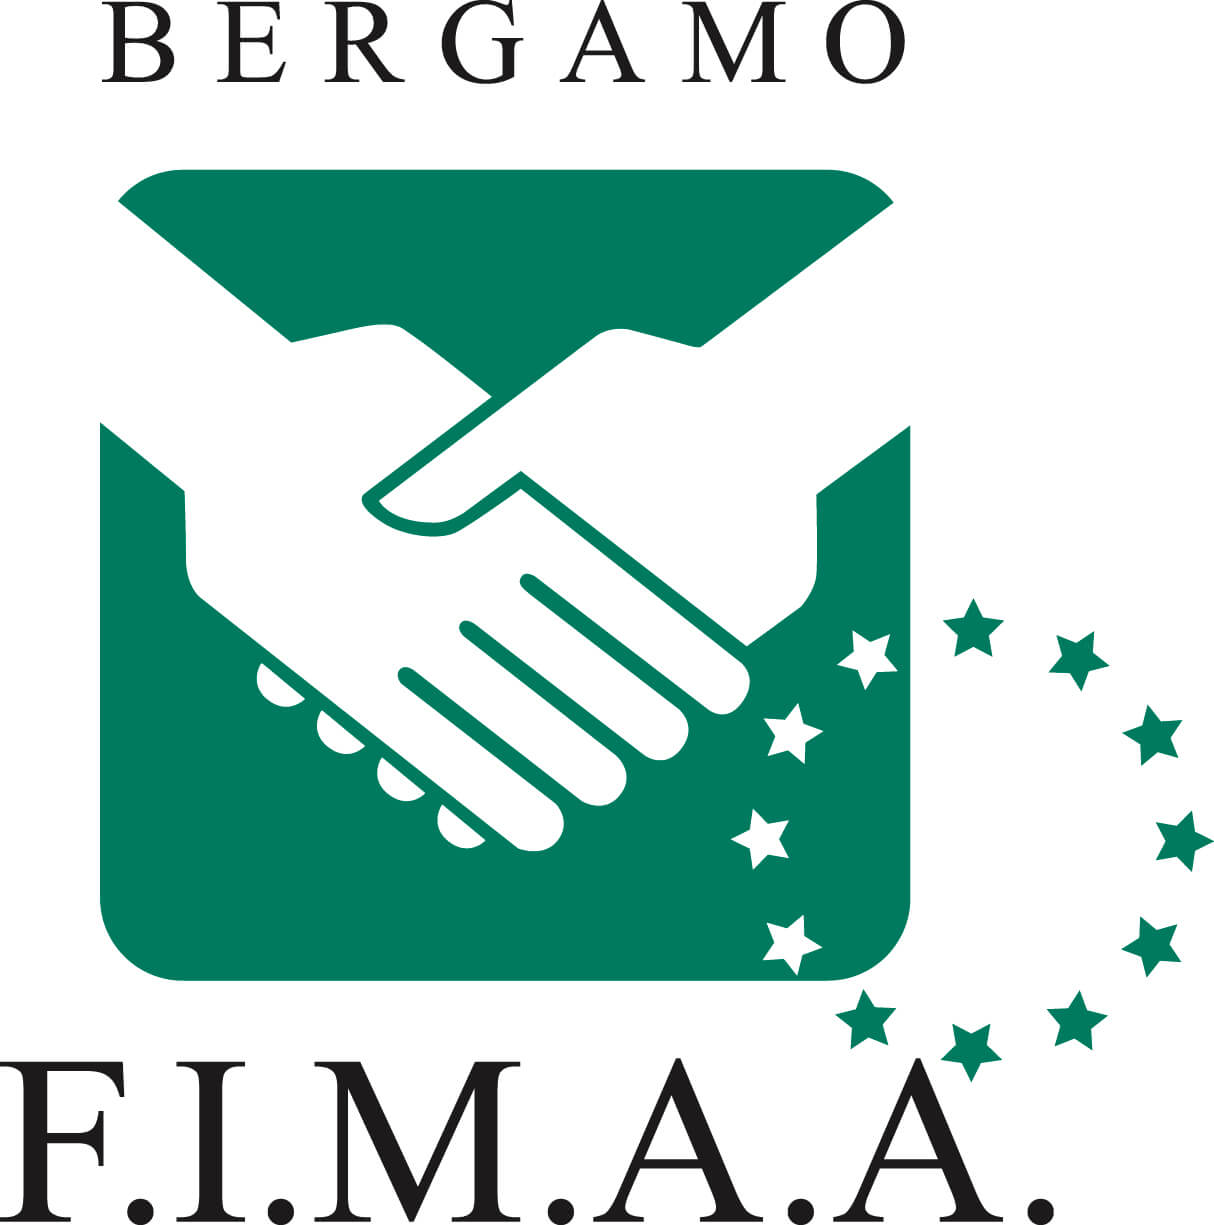 FIMAA Bergamo